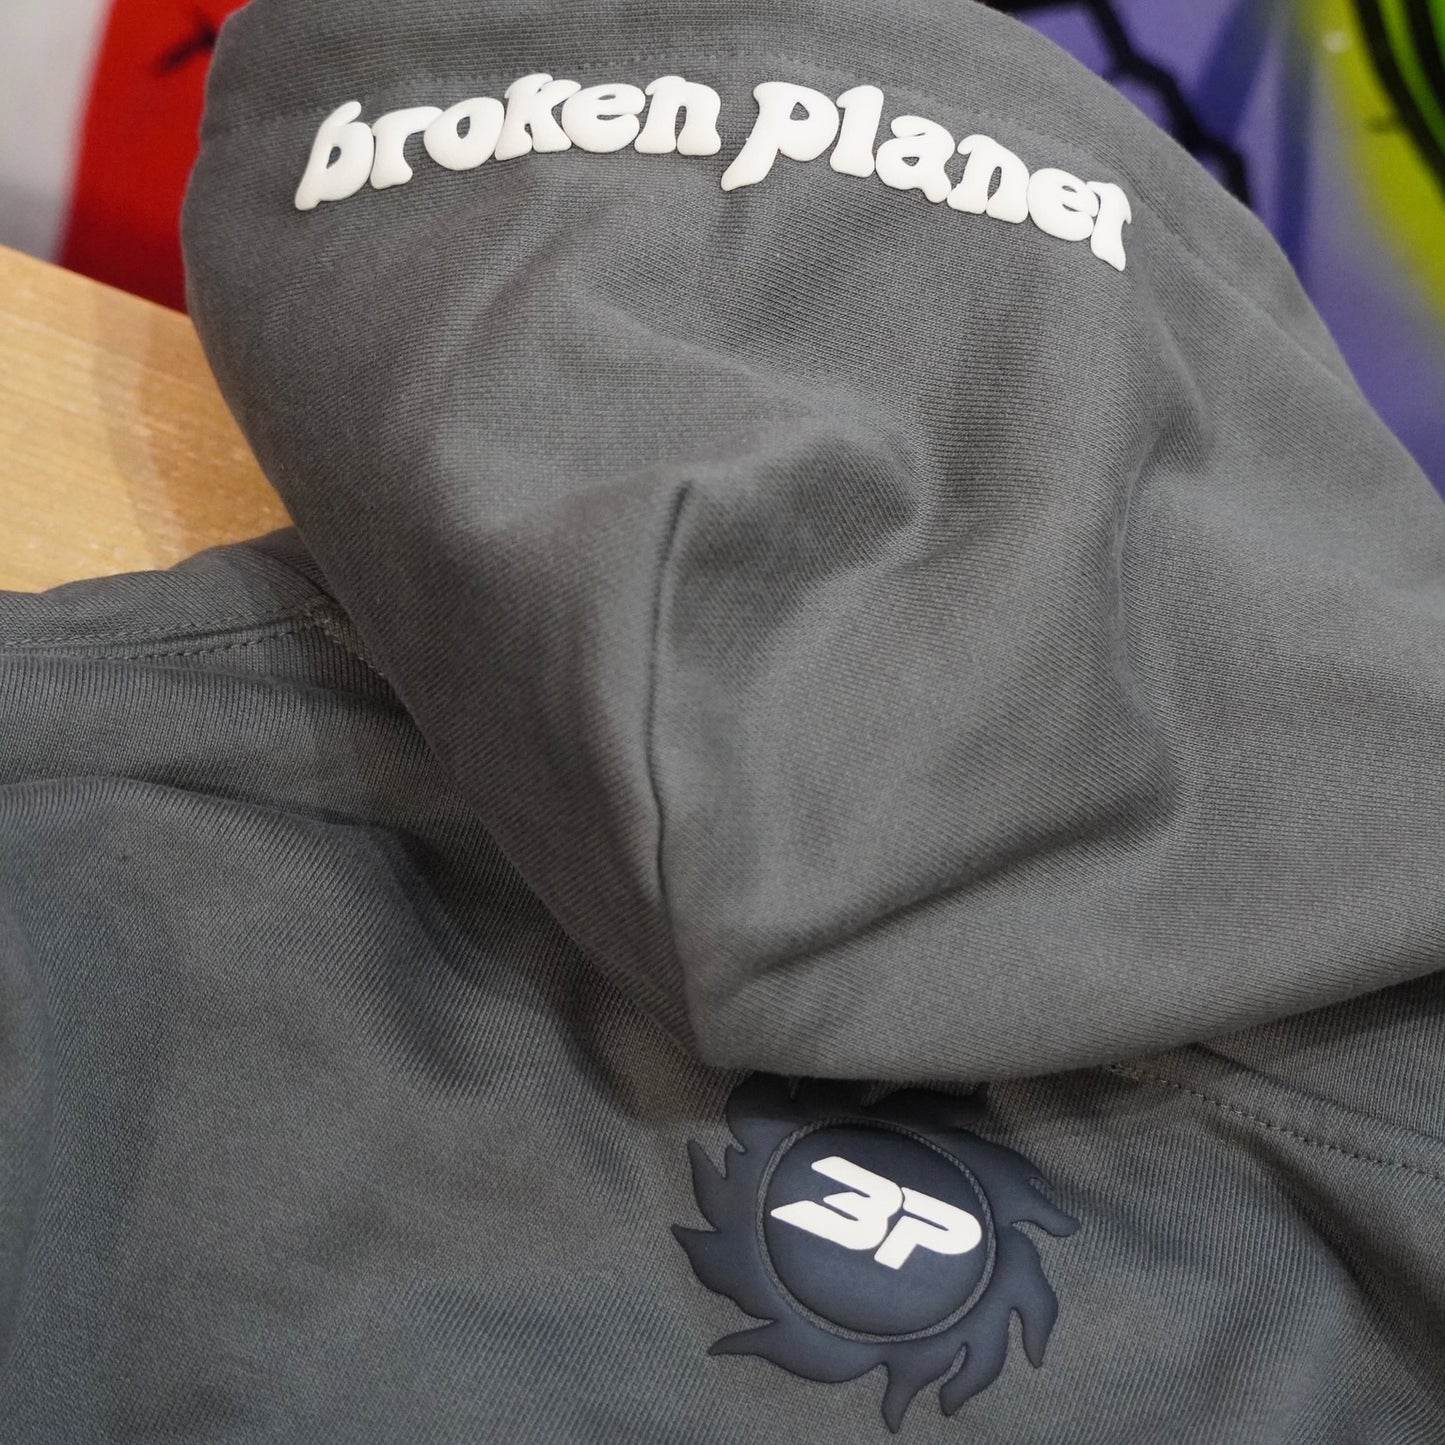 Broken Planet Market Space Trails Hoodie Beluga Gray by Broken Planet Market from £165.00